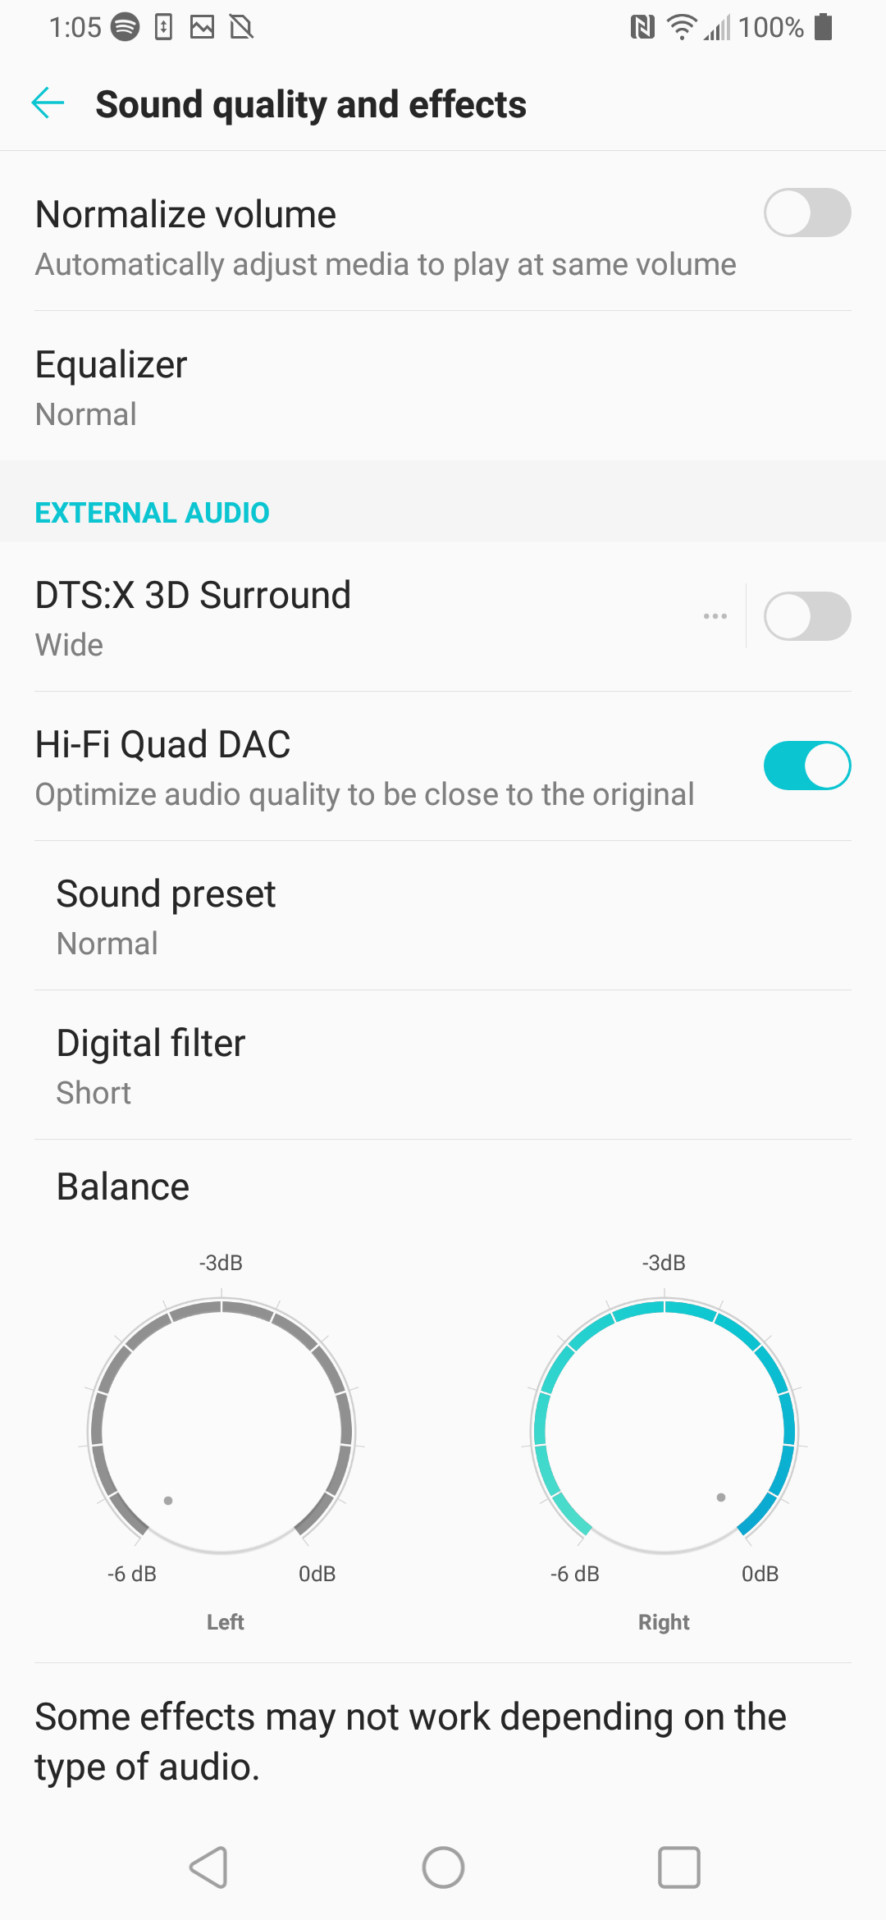 LG V40 ThinQ screenshot of sound quality and effects menu.